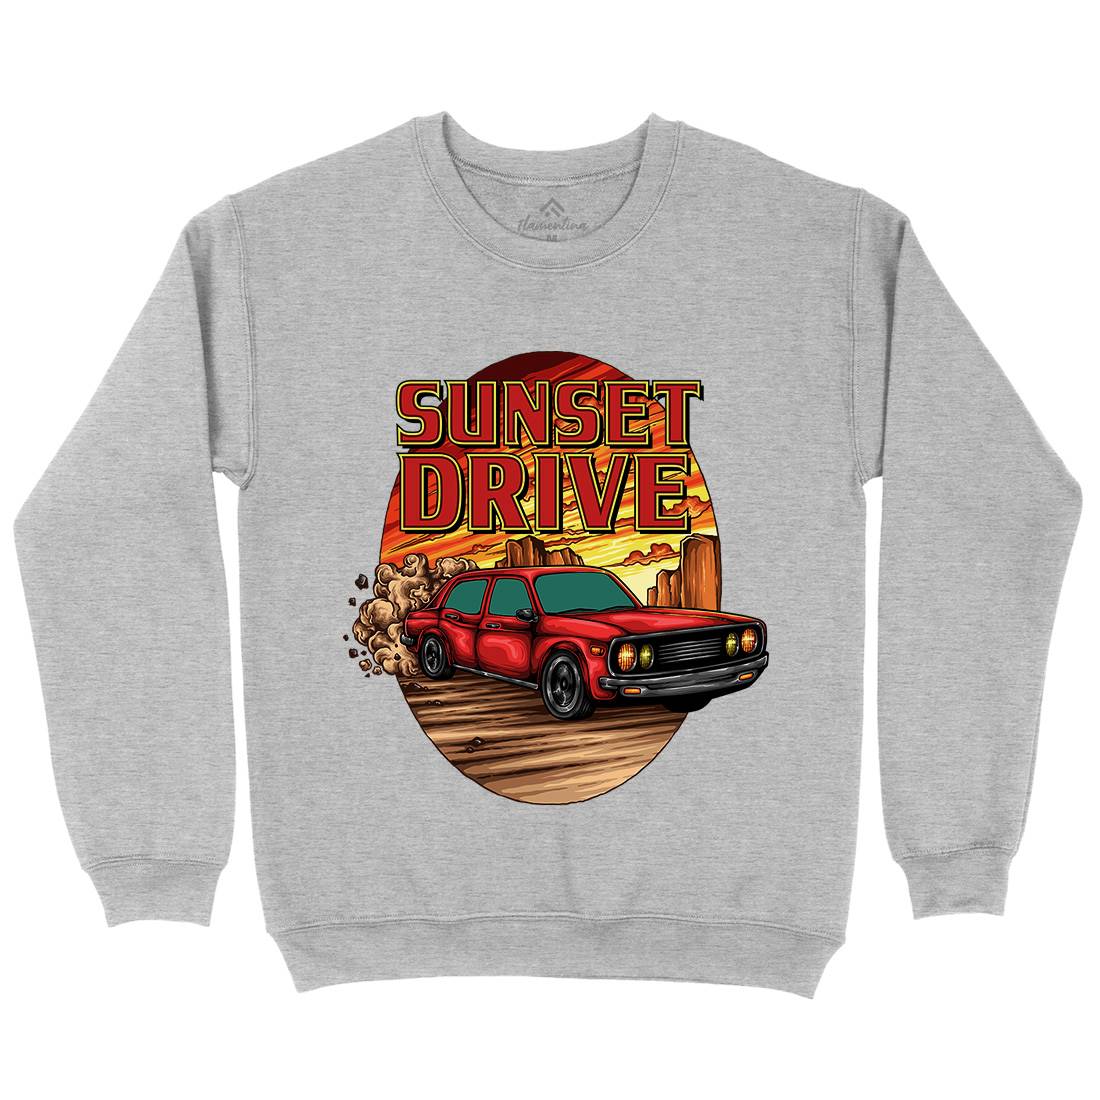 Sunset Drive Mens Crew Neck Sweatshirt Cars A472